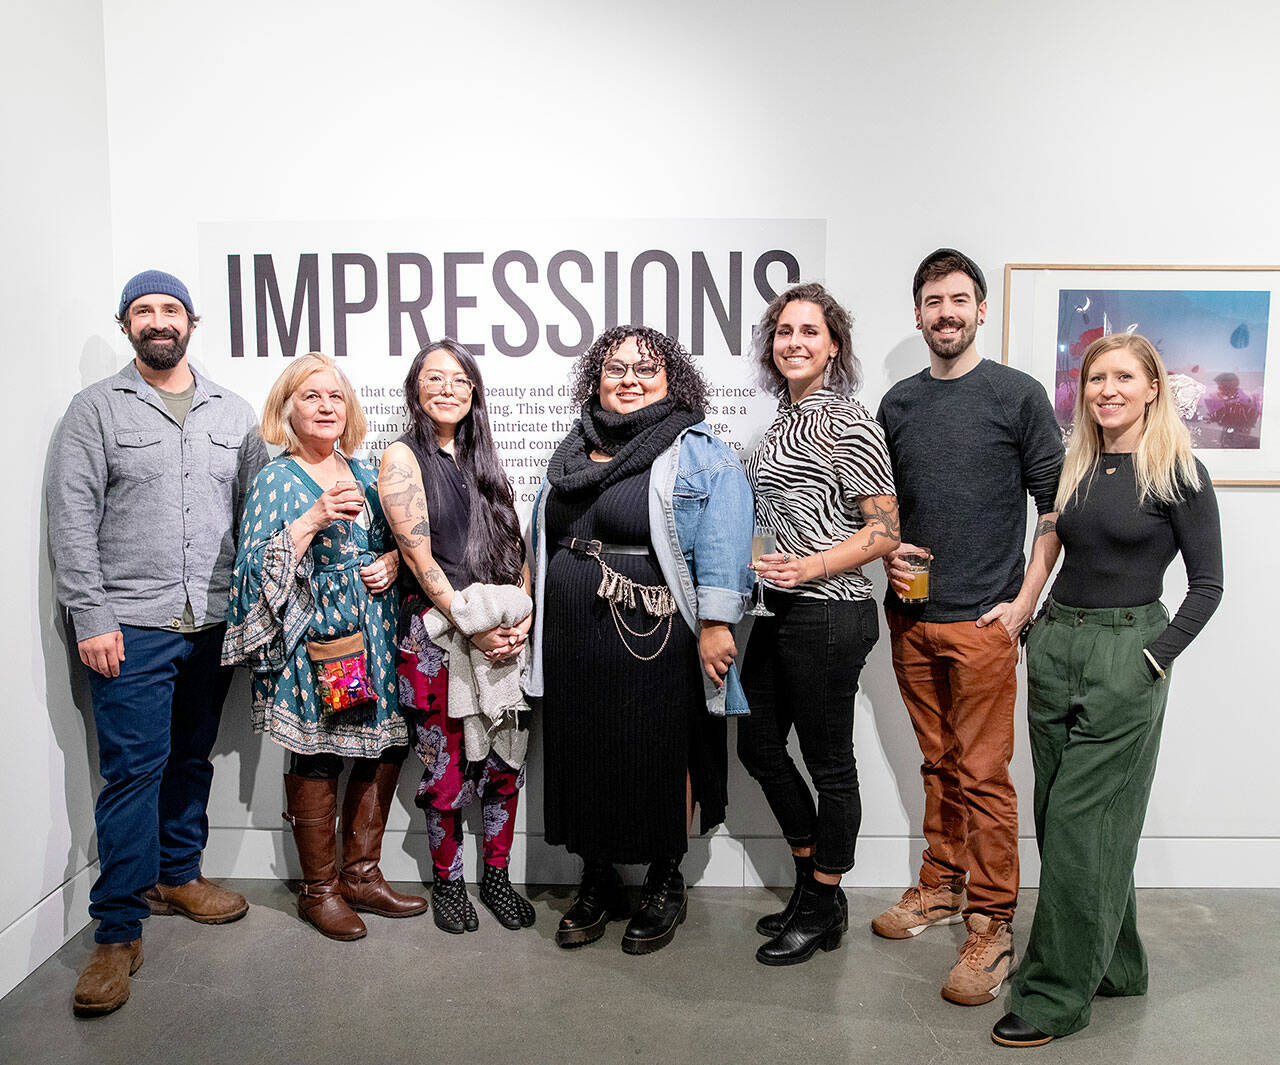 Impressions artists are, from left, Cody Hagen, Monica Gutierrez-Quarto, Erika Harada, Eileen Jimenez, Nikki Jabbora-Barber, Thomas Connery and curator Lindsay Shepherd.